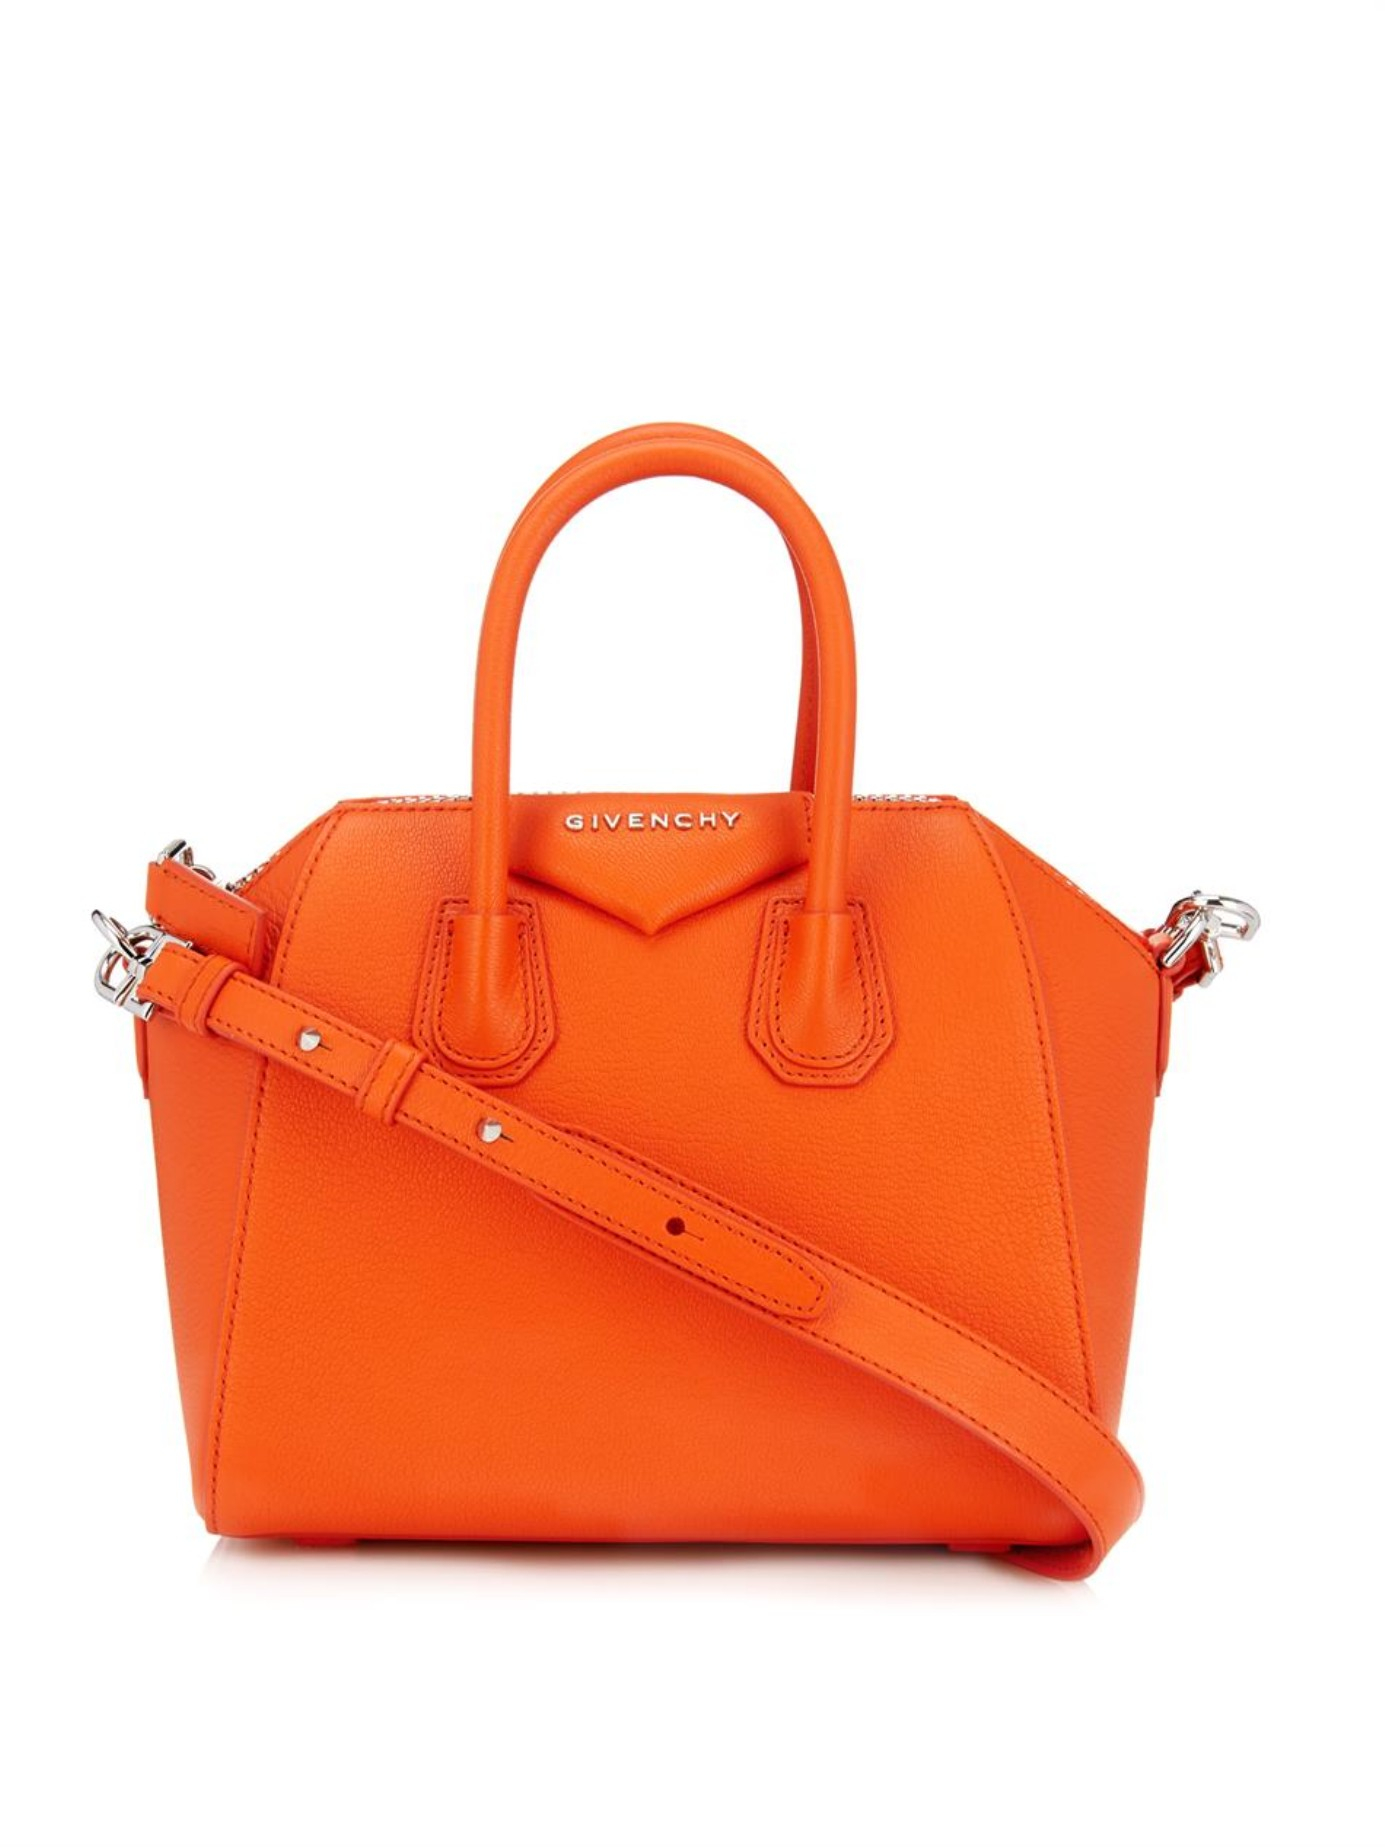 Lyst - Givenchy Antigona Mini Leather Cross-Body Bag in Orange